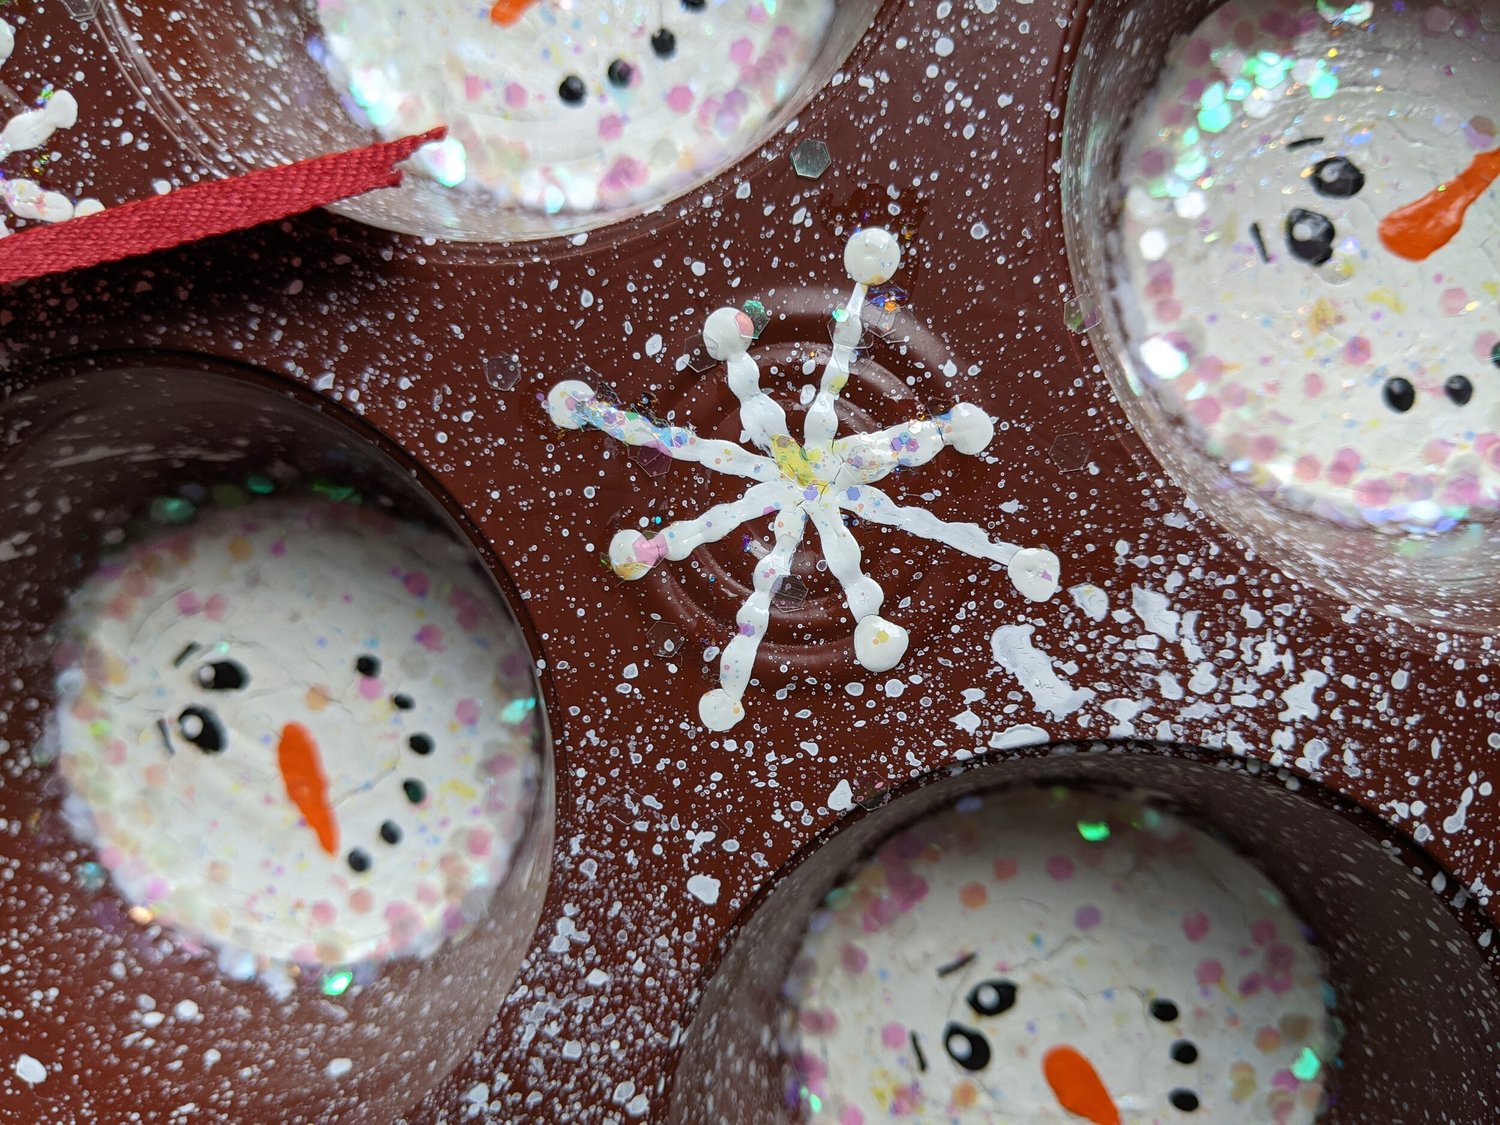 Decorative Holiday Muffin Tin Wall Decor - Santa Coin Top Left — Glimmerbug  Handmade Art